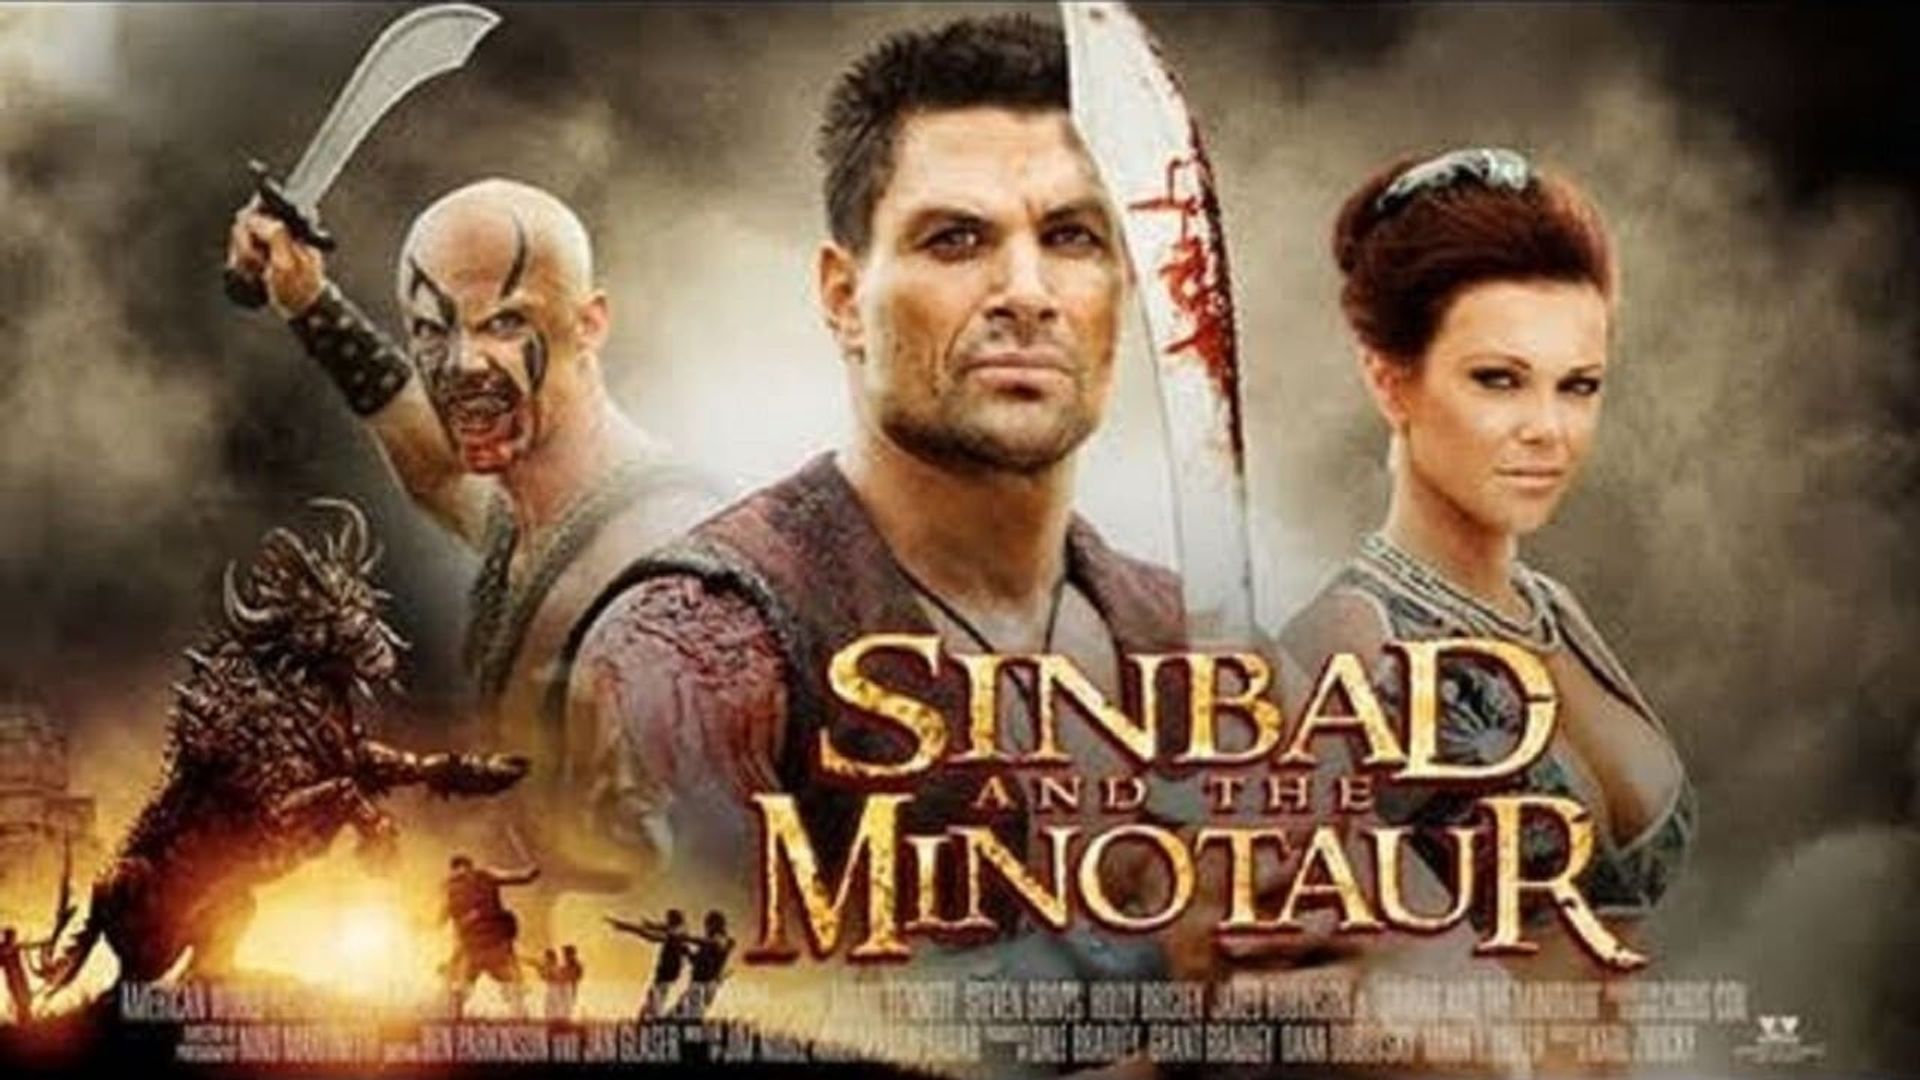 Sinbad and the Minotaur background